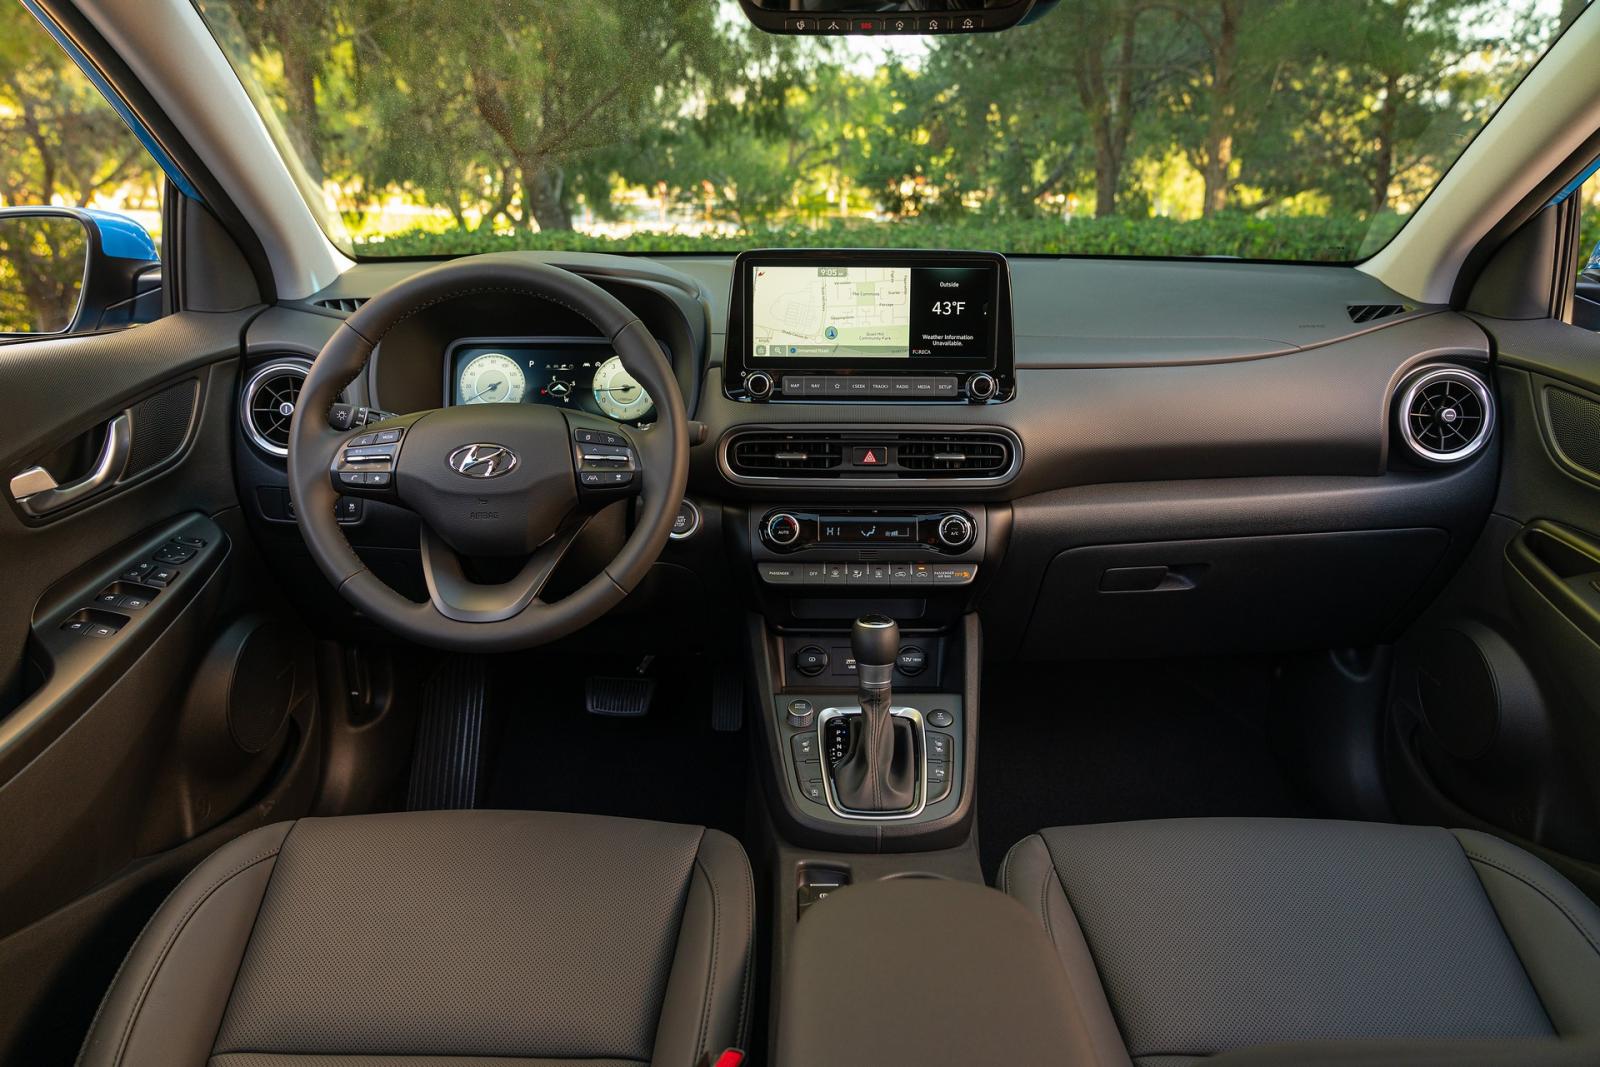 Hyundai Kona Interior - The B-segment Car With Higher Experience